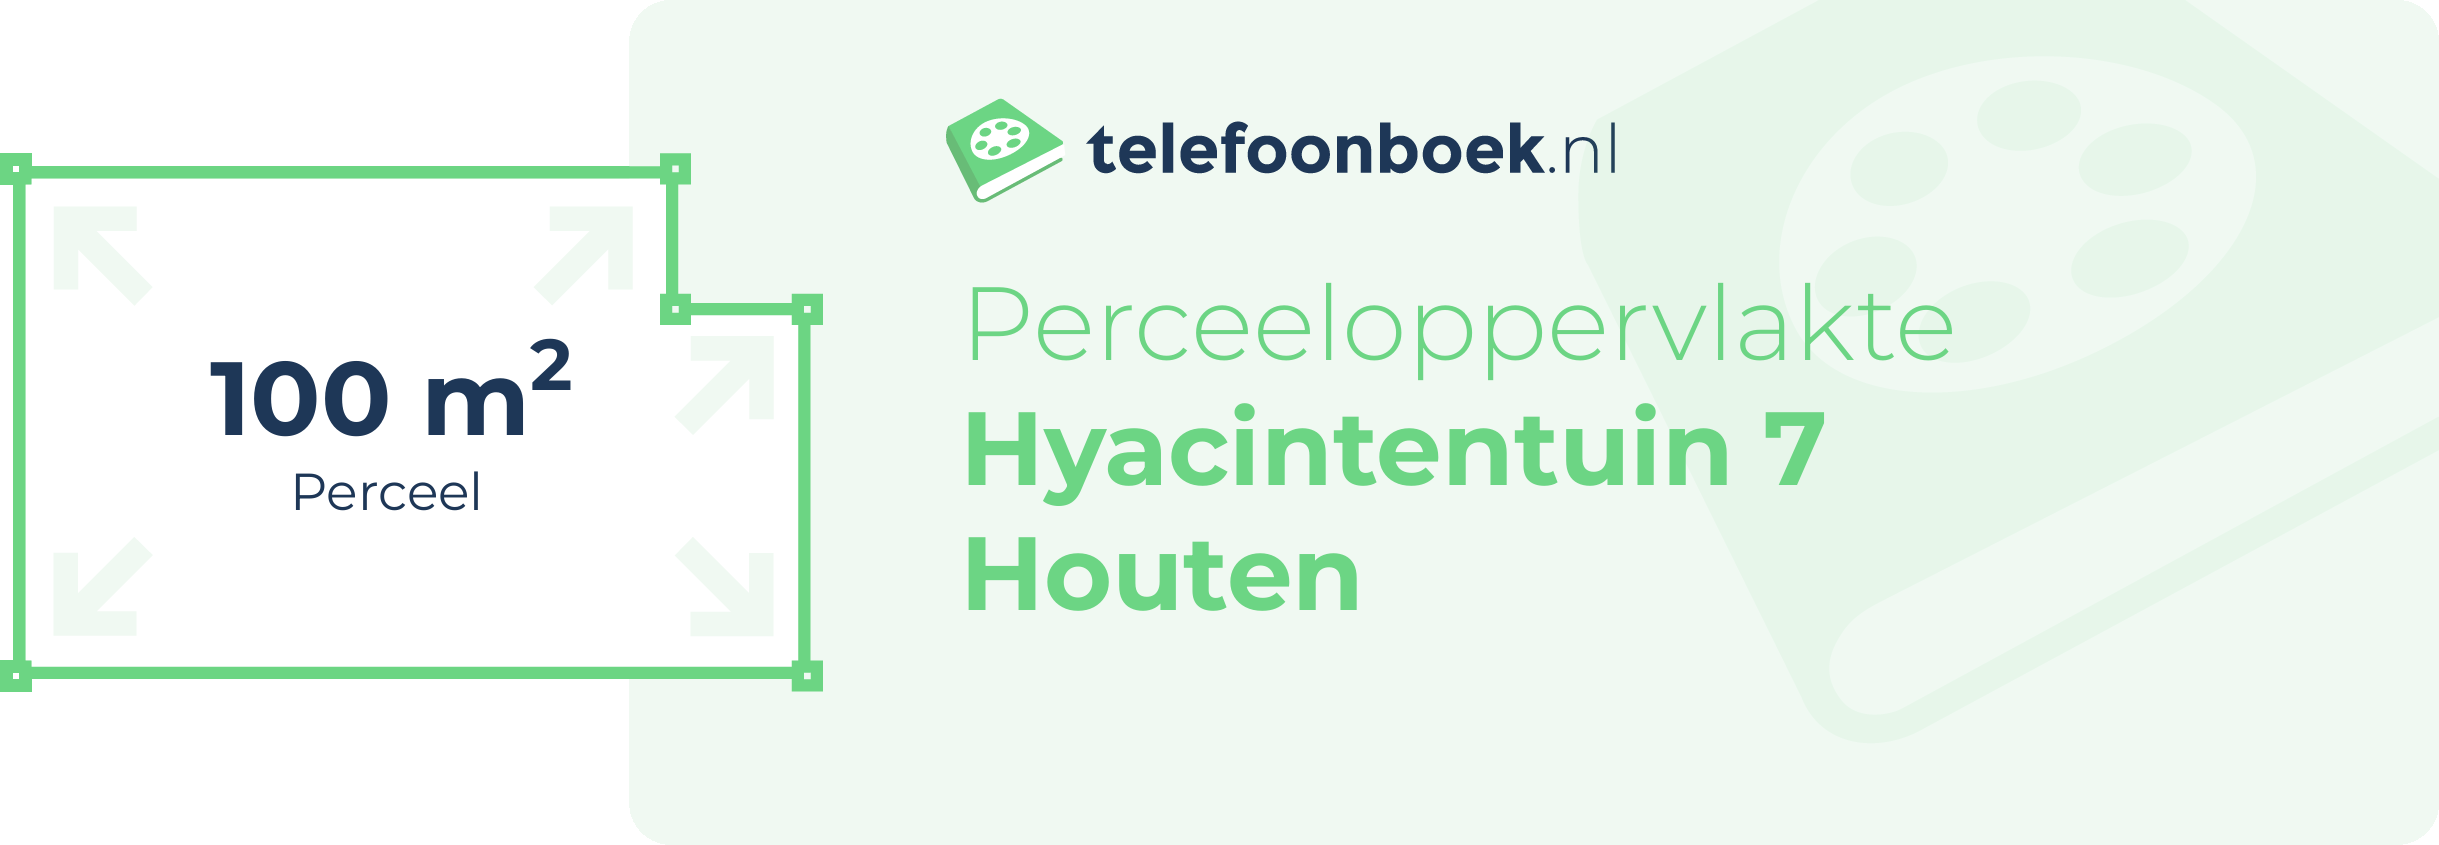 Perceeloppervlakte Hyacintentuin 7 Houten